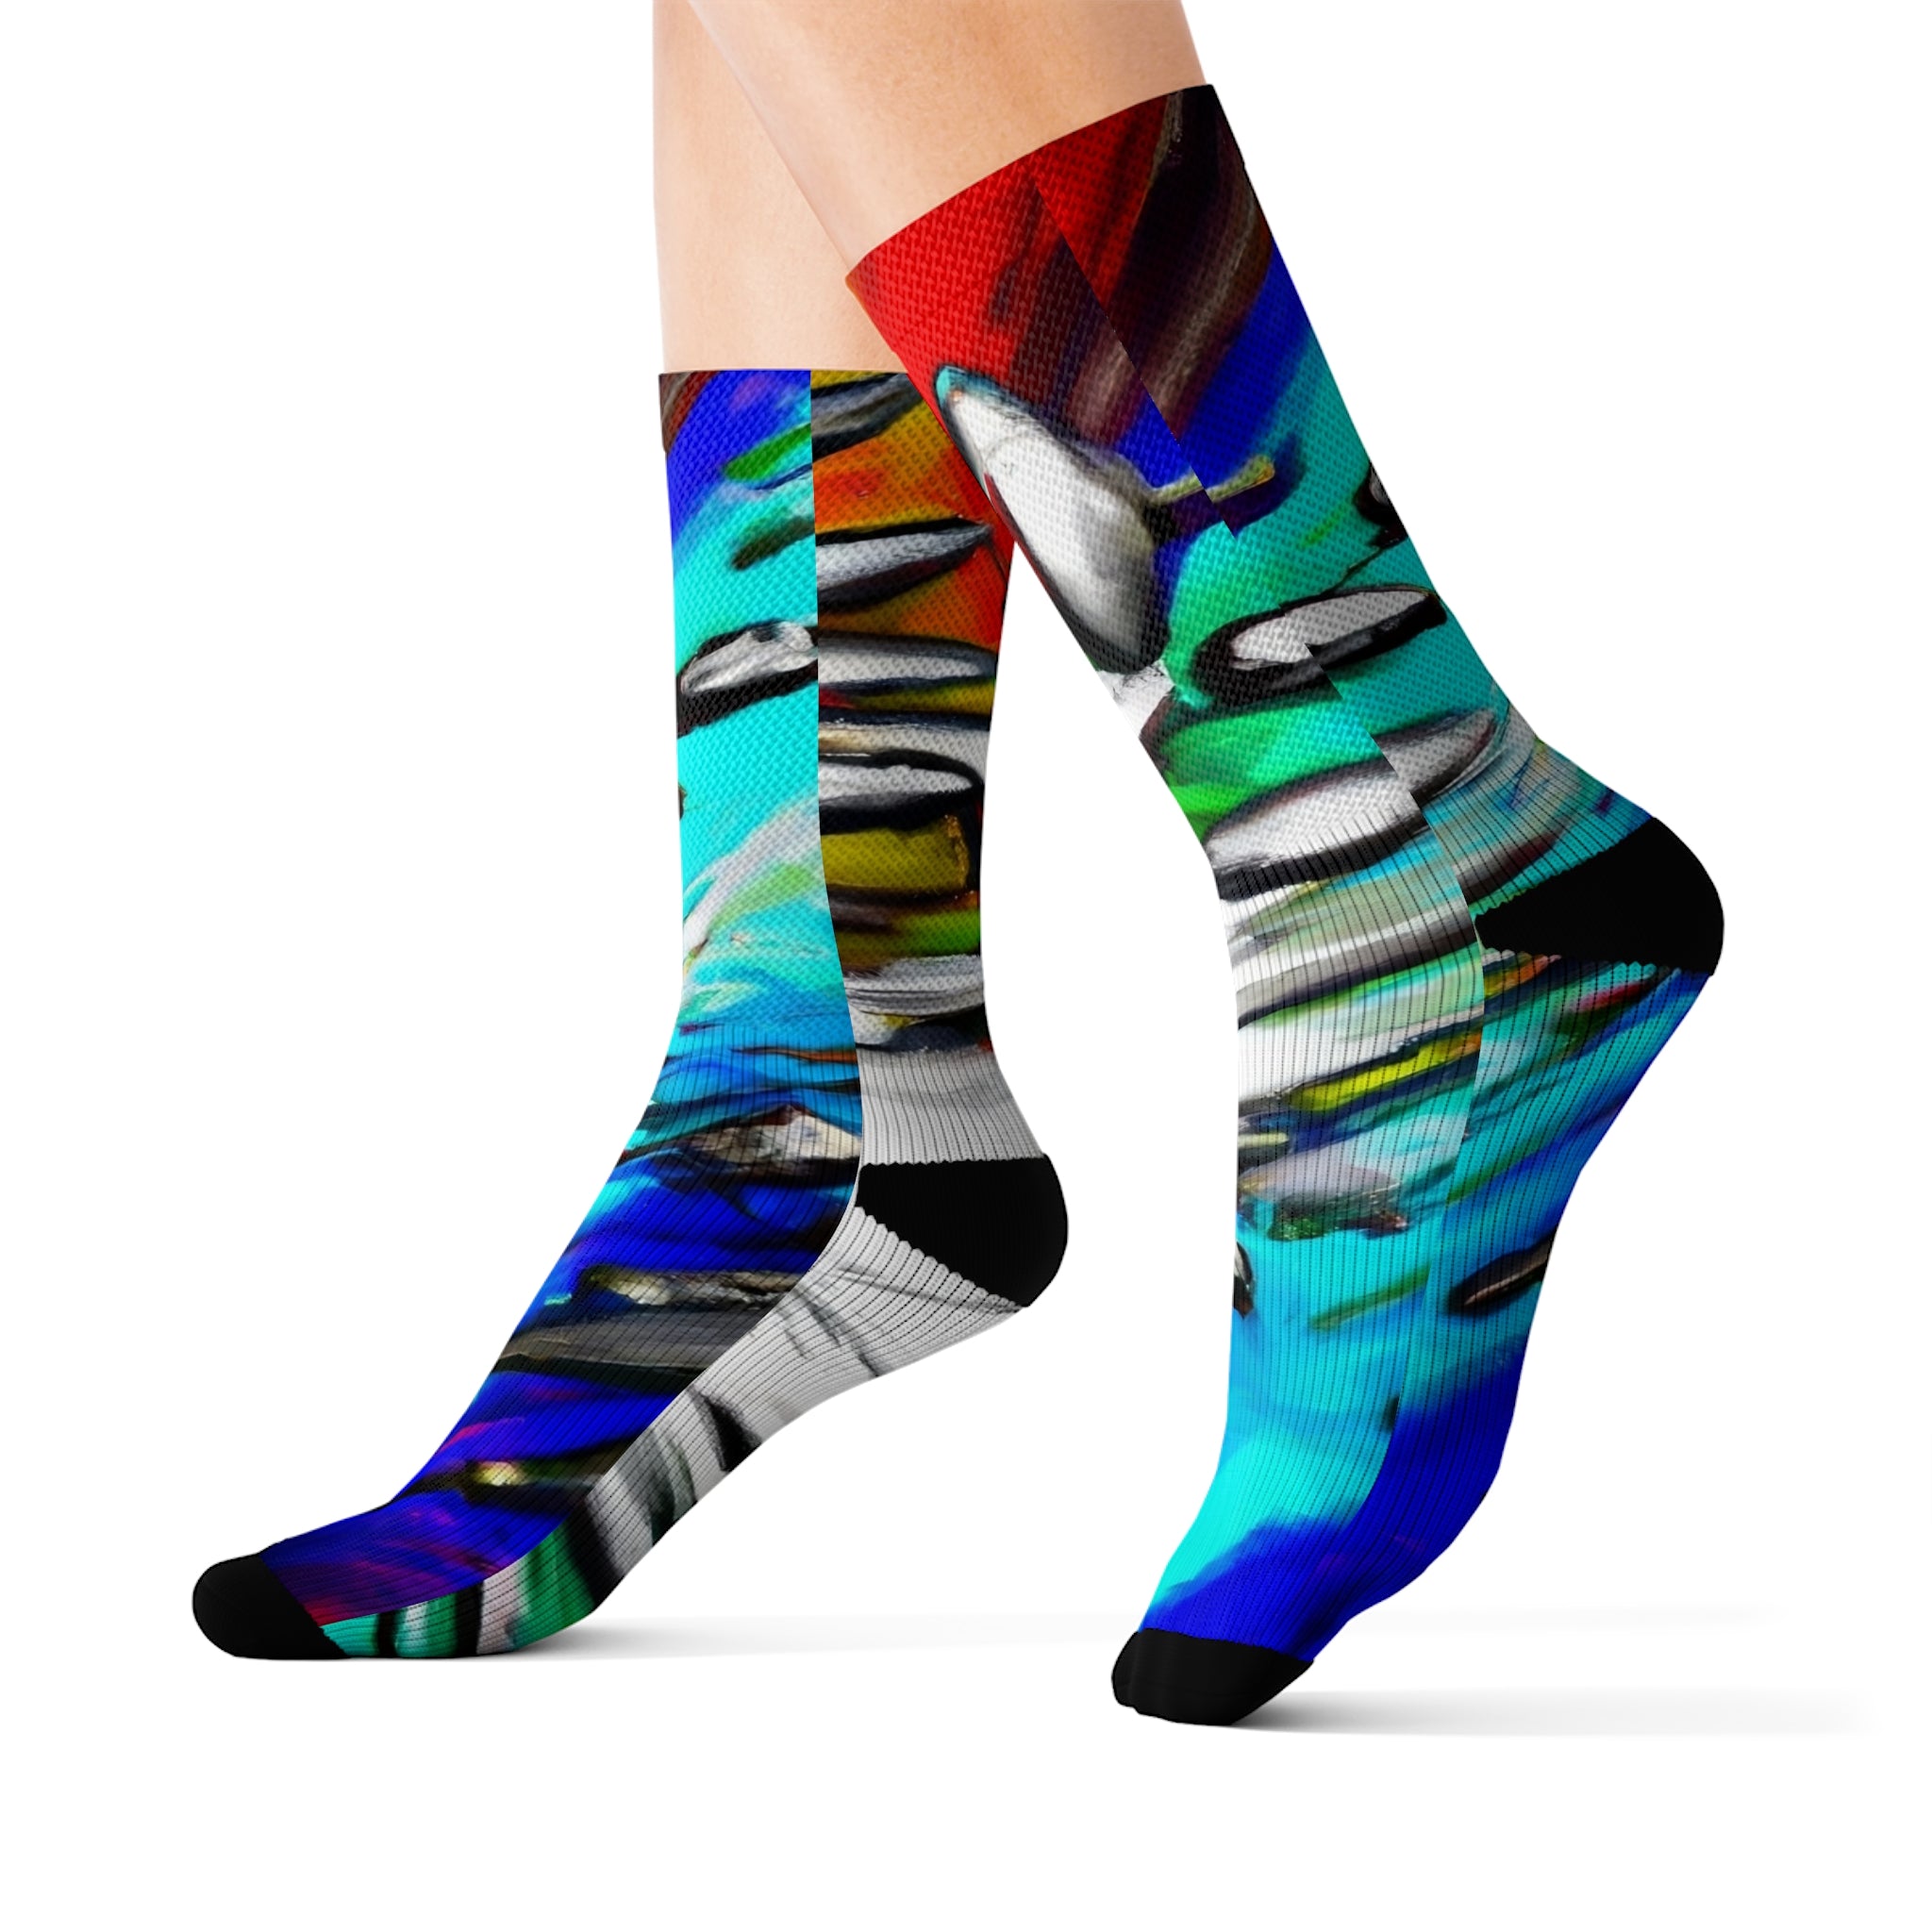 Shinning Colorful Socks